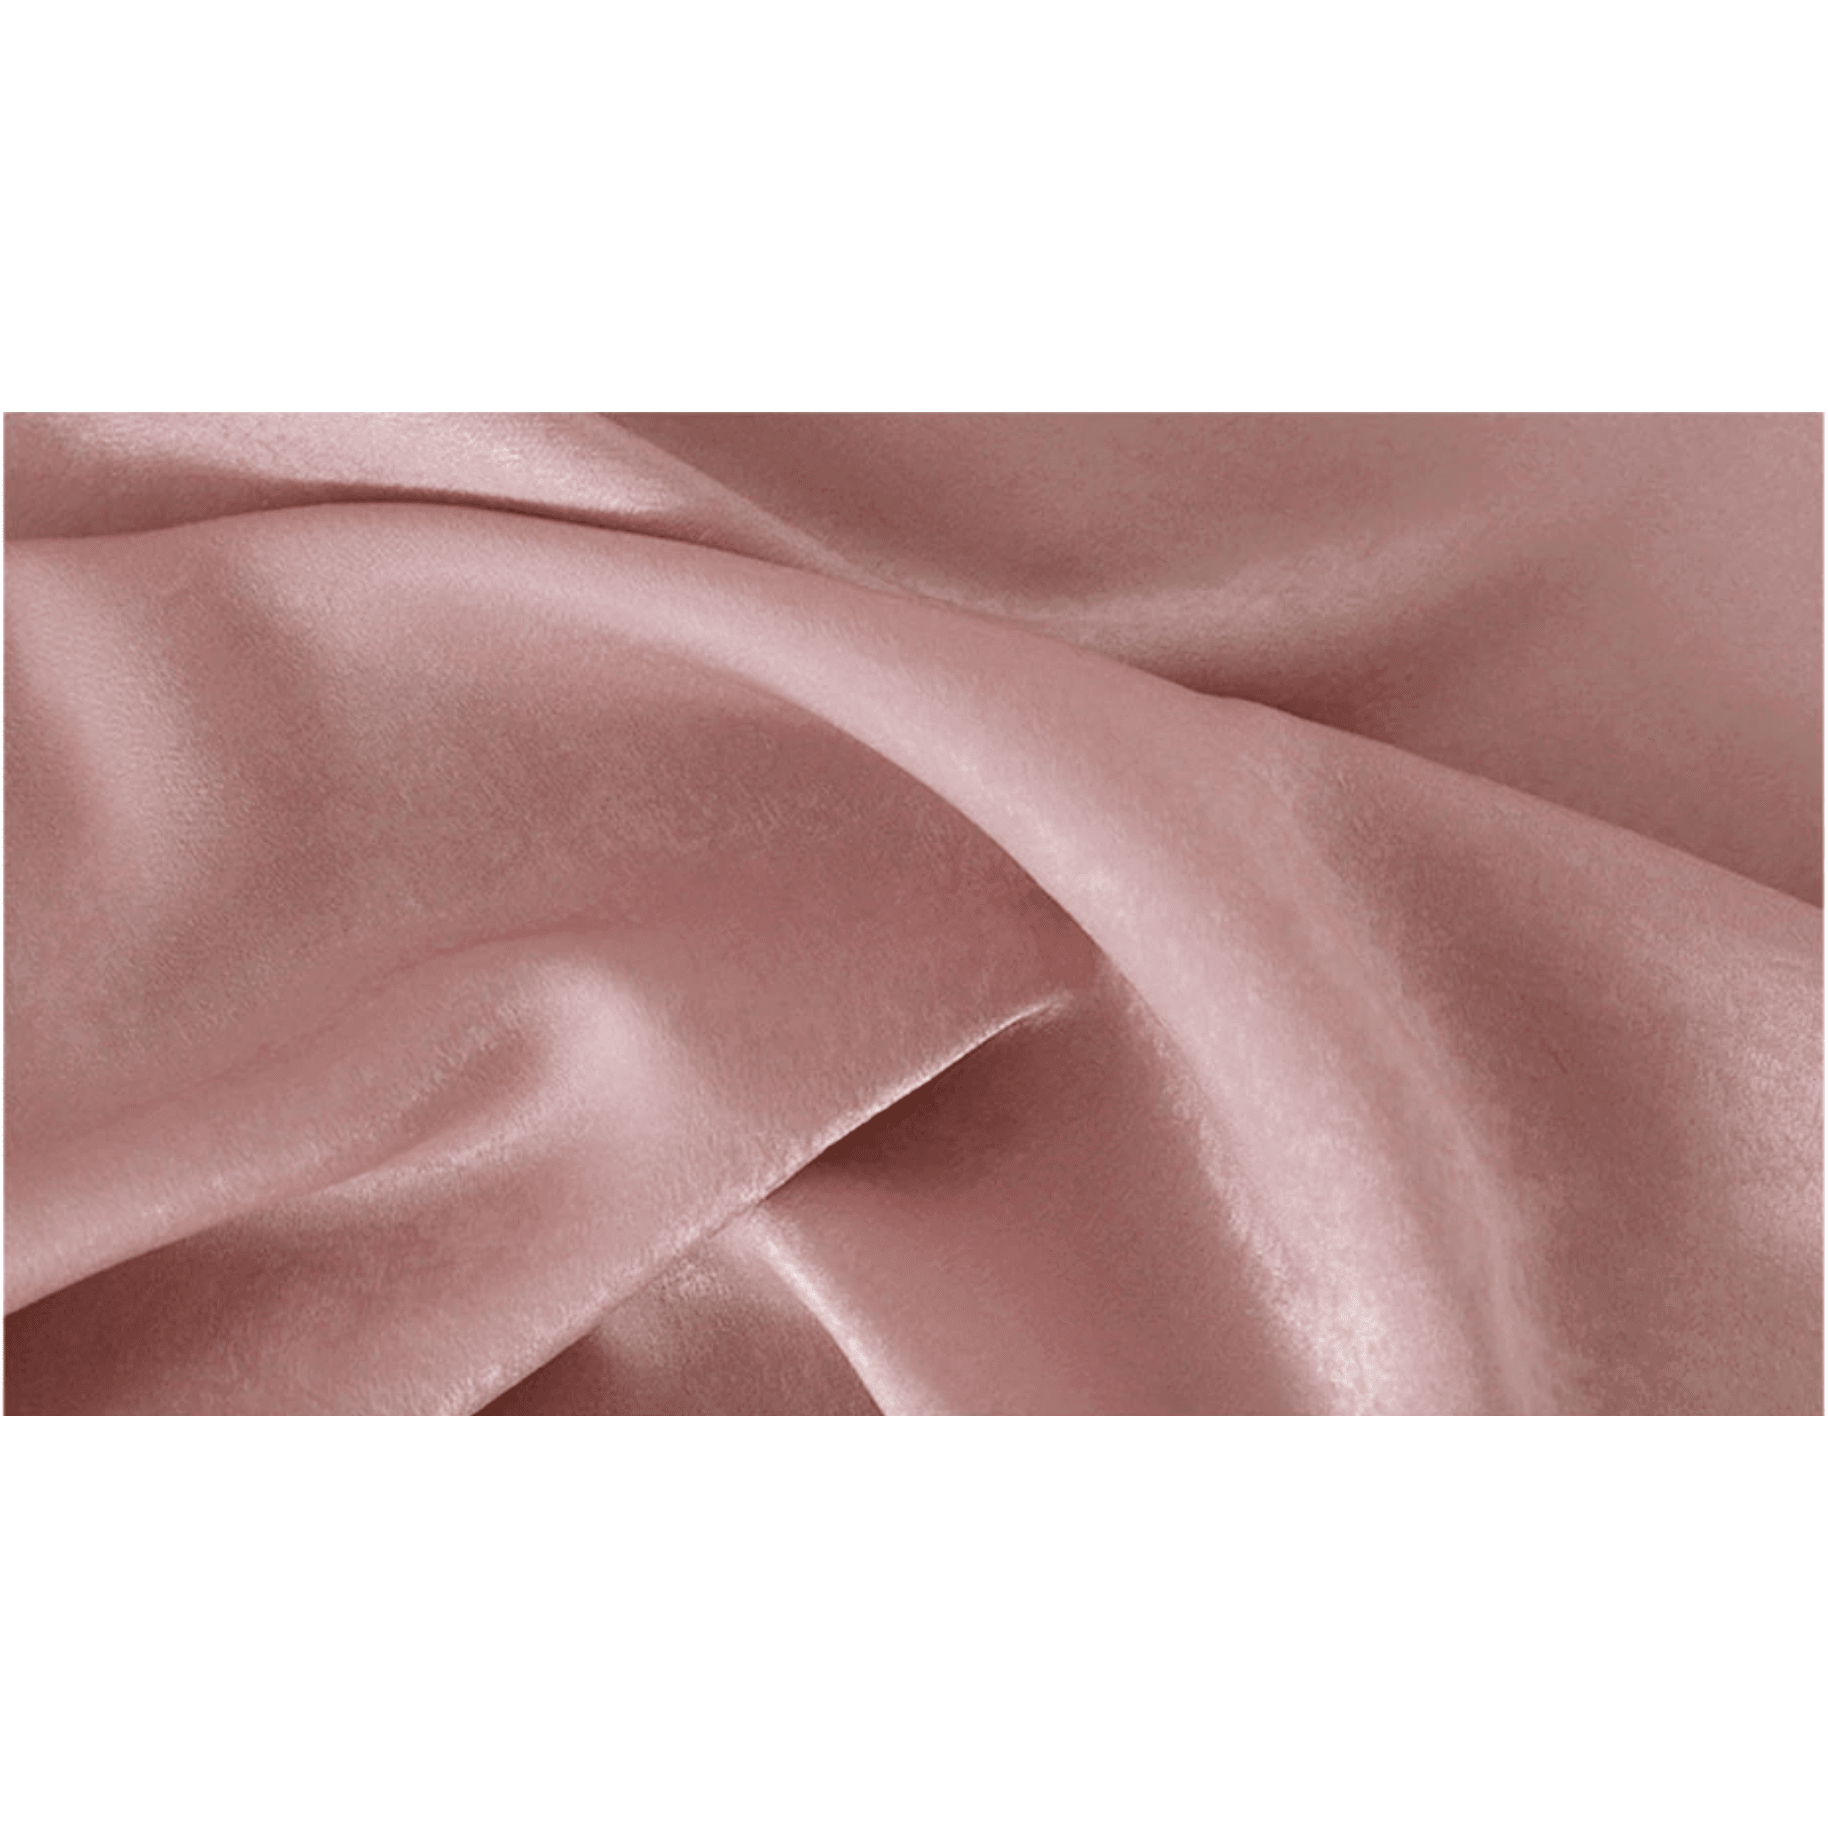 Jason Plain Crushed Sheer Curtain - Deep Pink